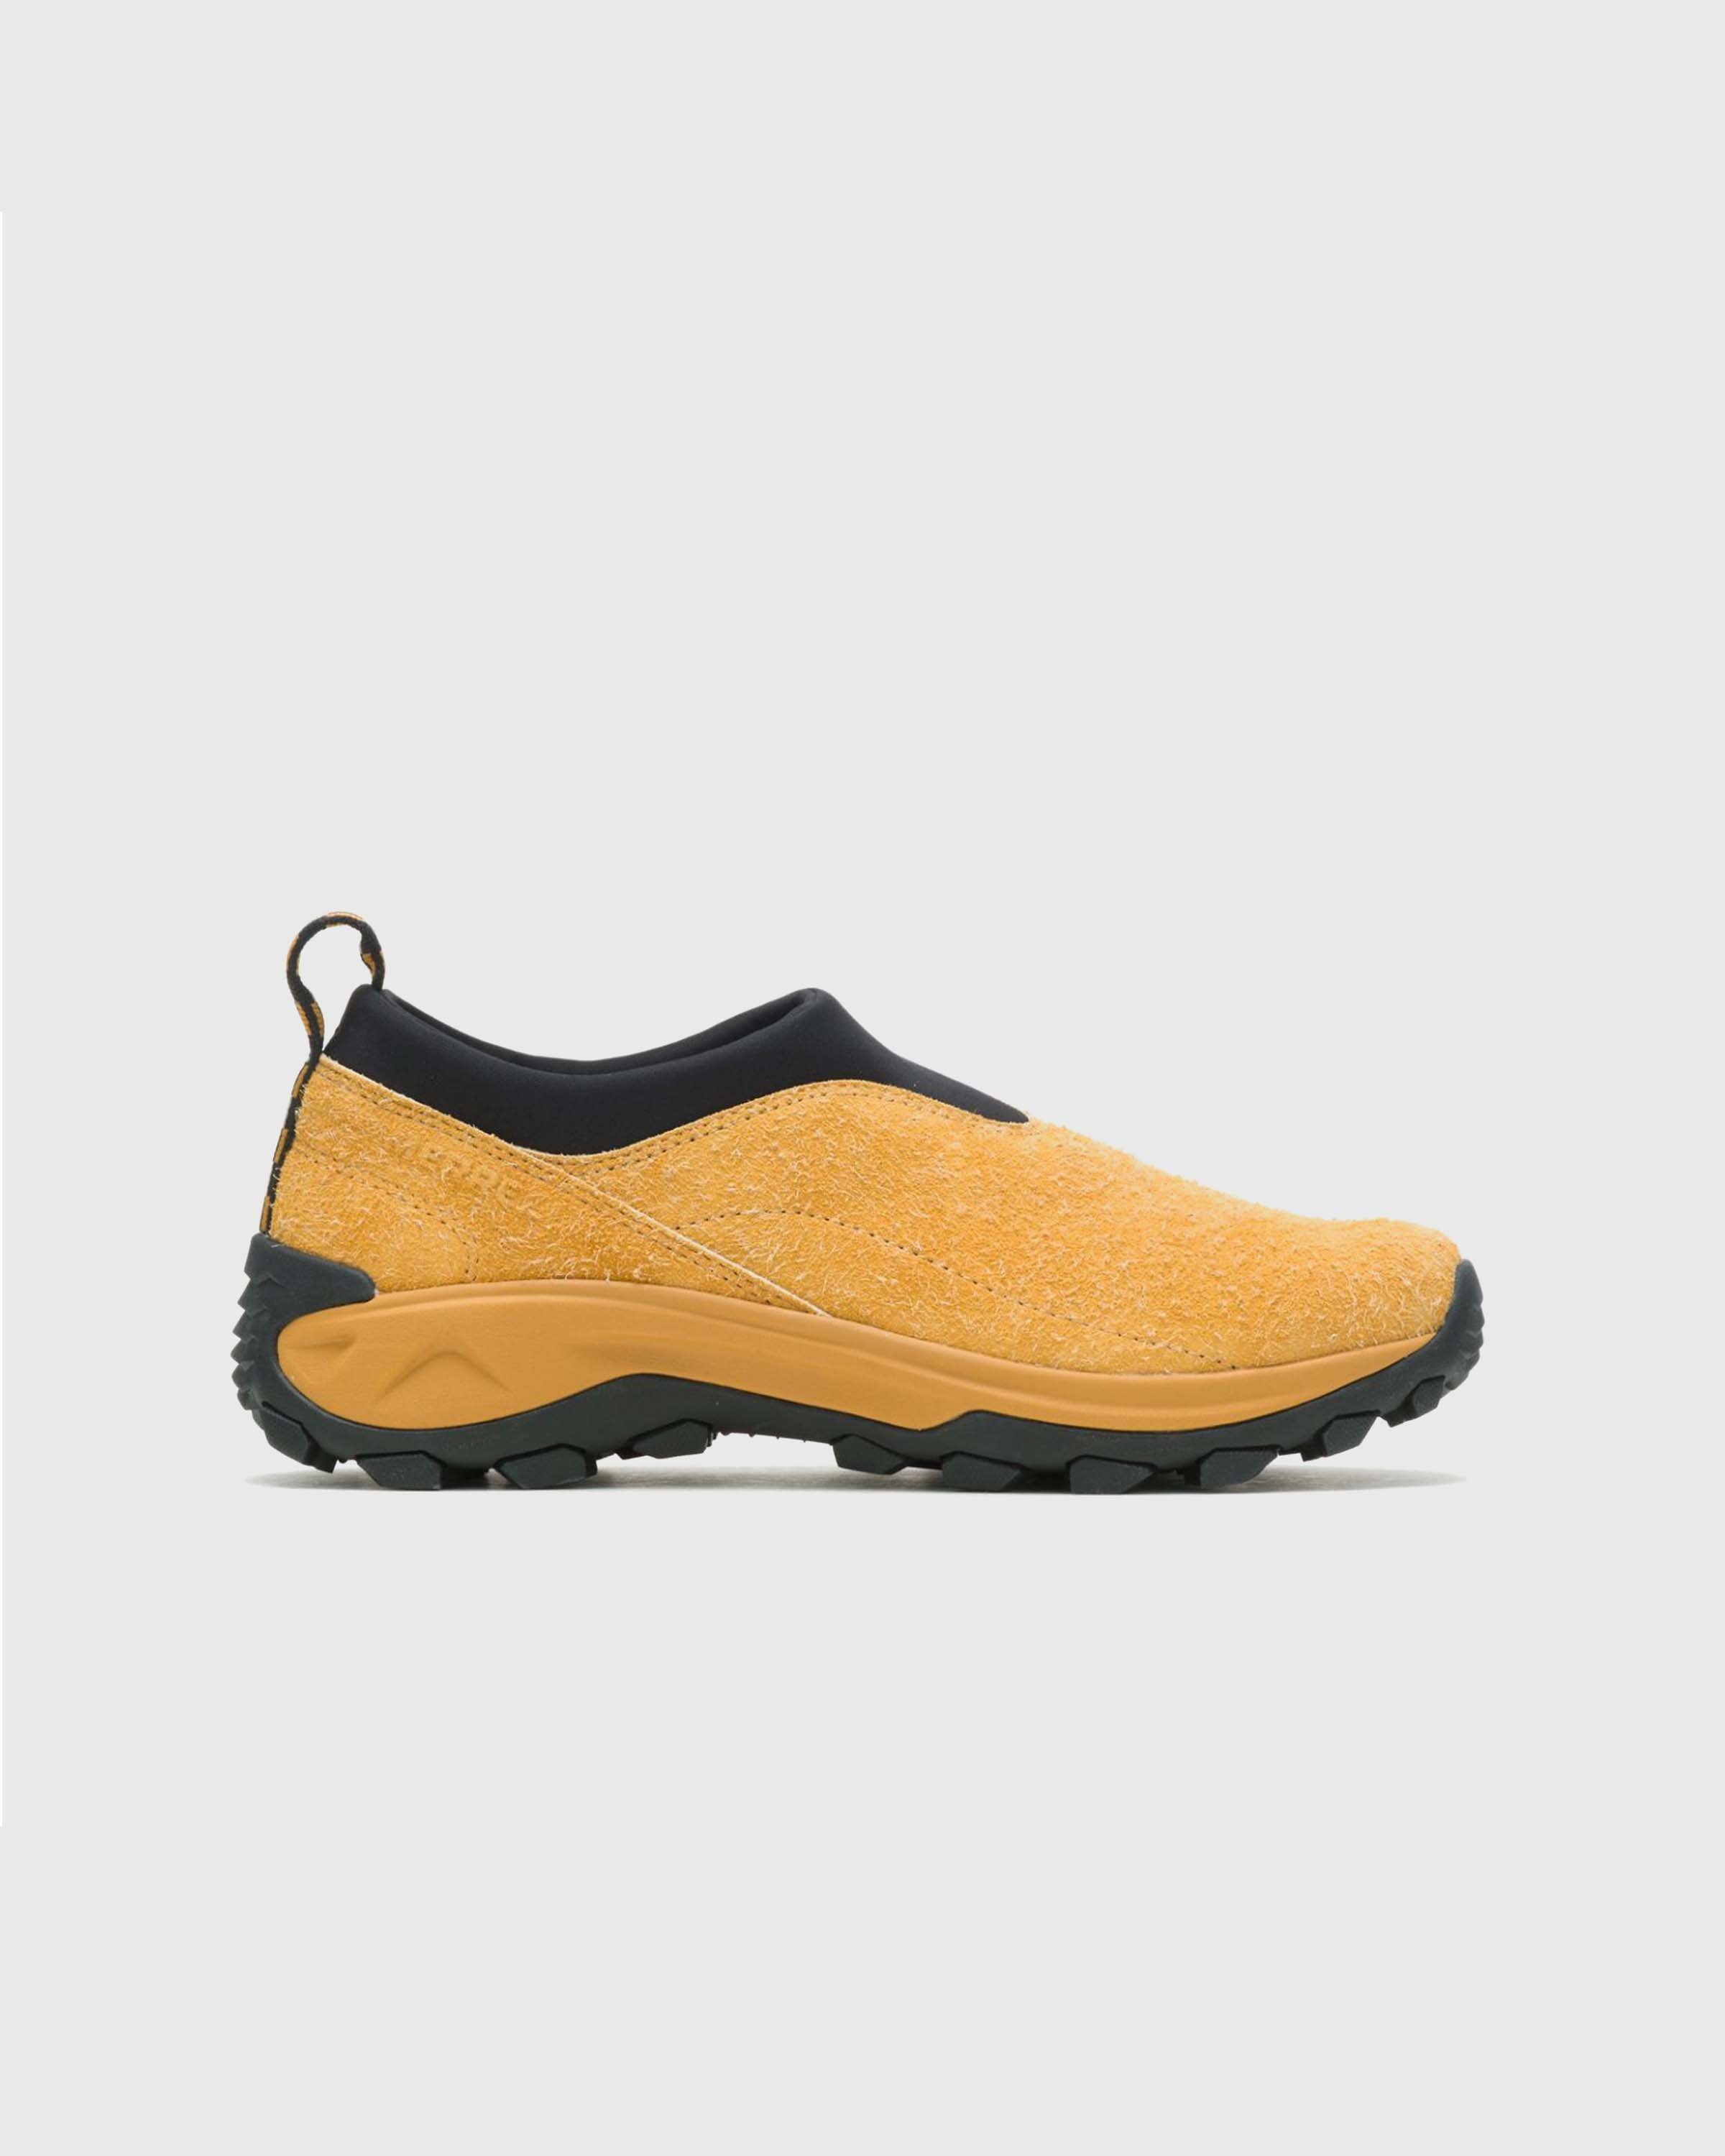 Merrell - Winter Moc 3 1TRL Chai - Footwear - Yellow - Image 1